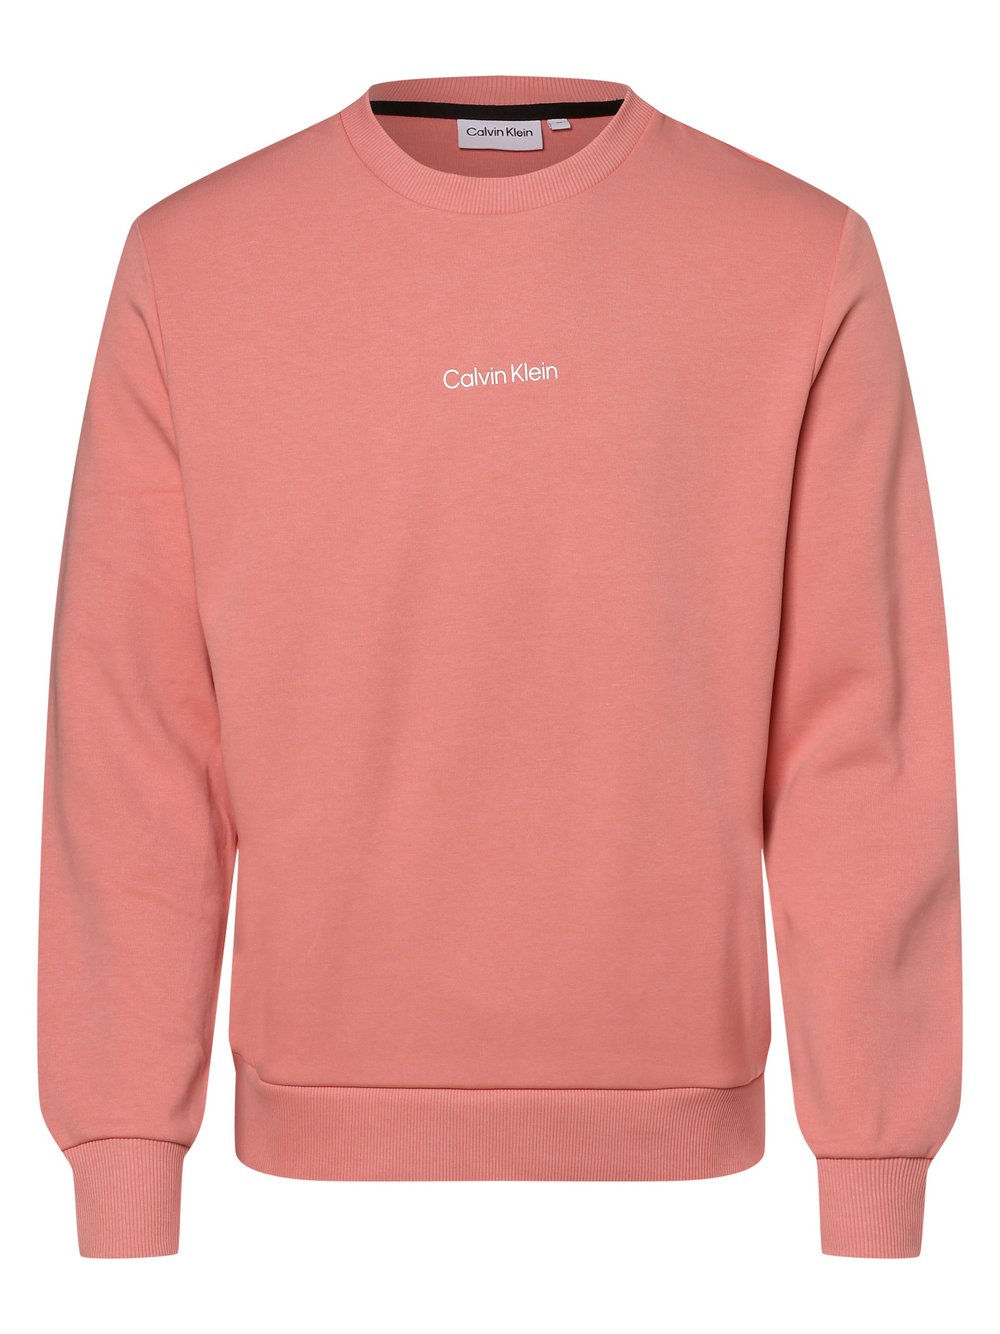 Calvin Klein - Męska bluza nierozpinana, różowy